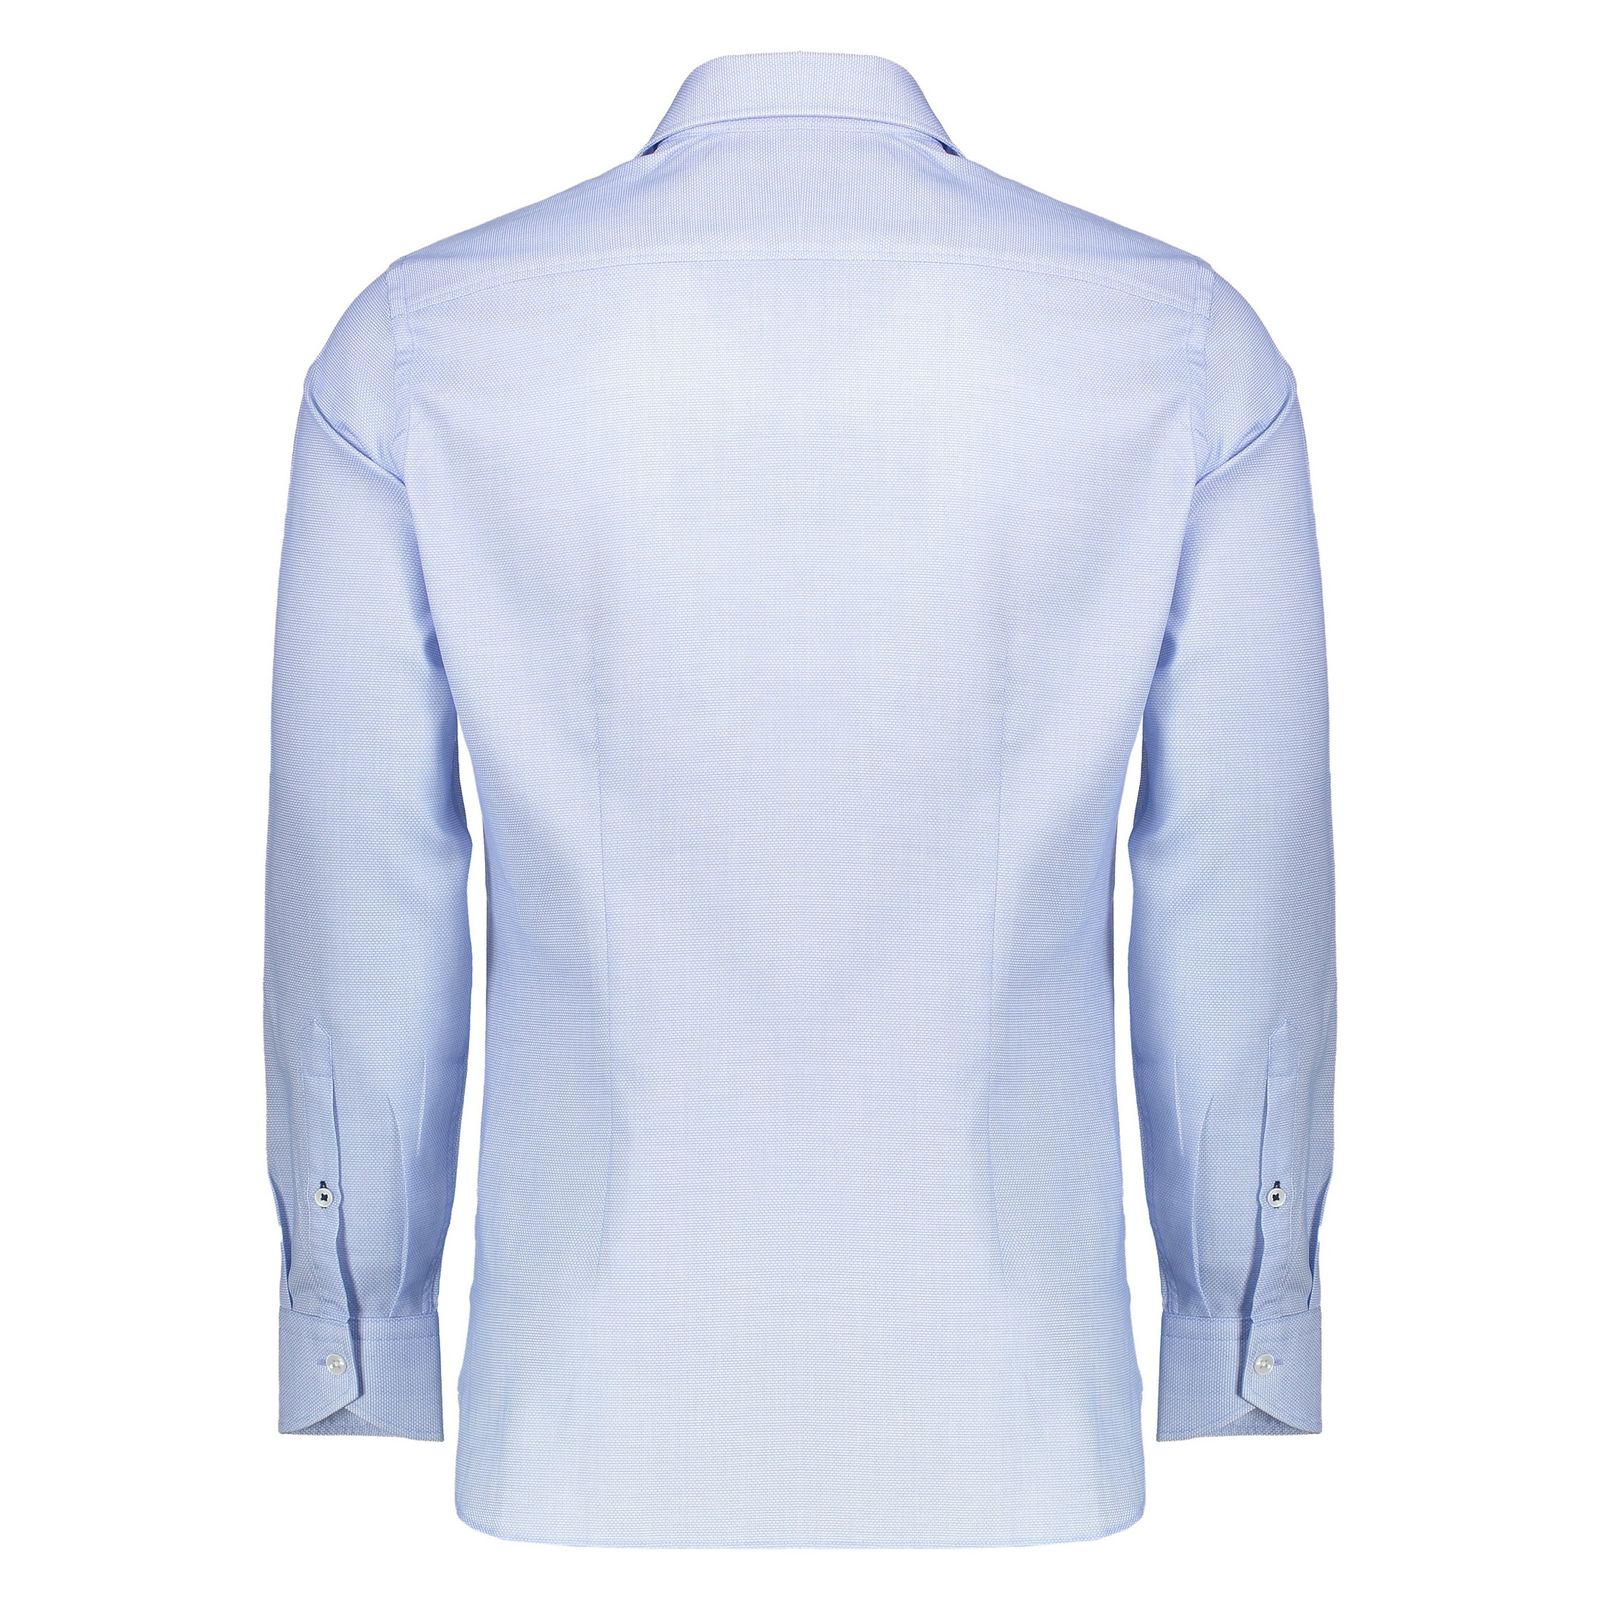 پیراهن رسمی مردانه - مانگو - آبي روشن - 6